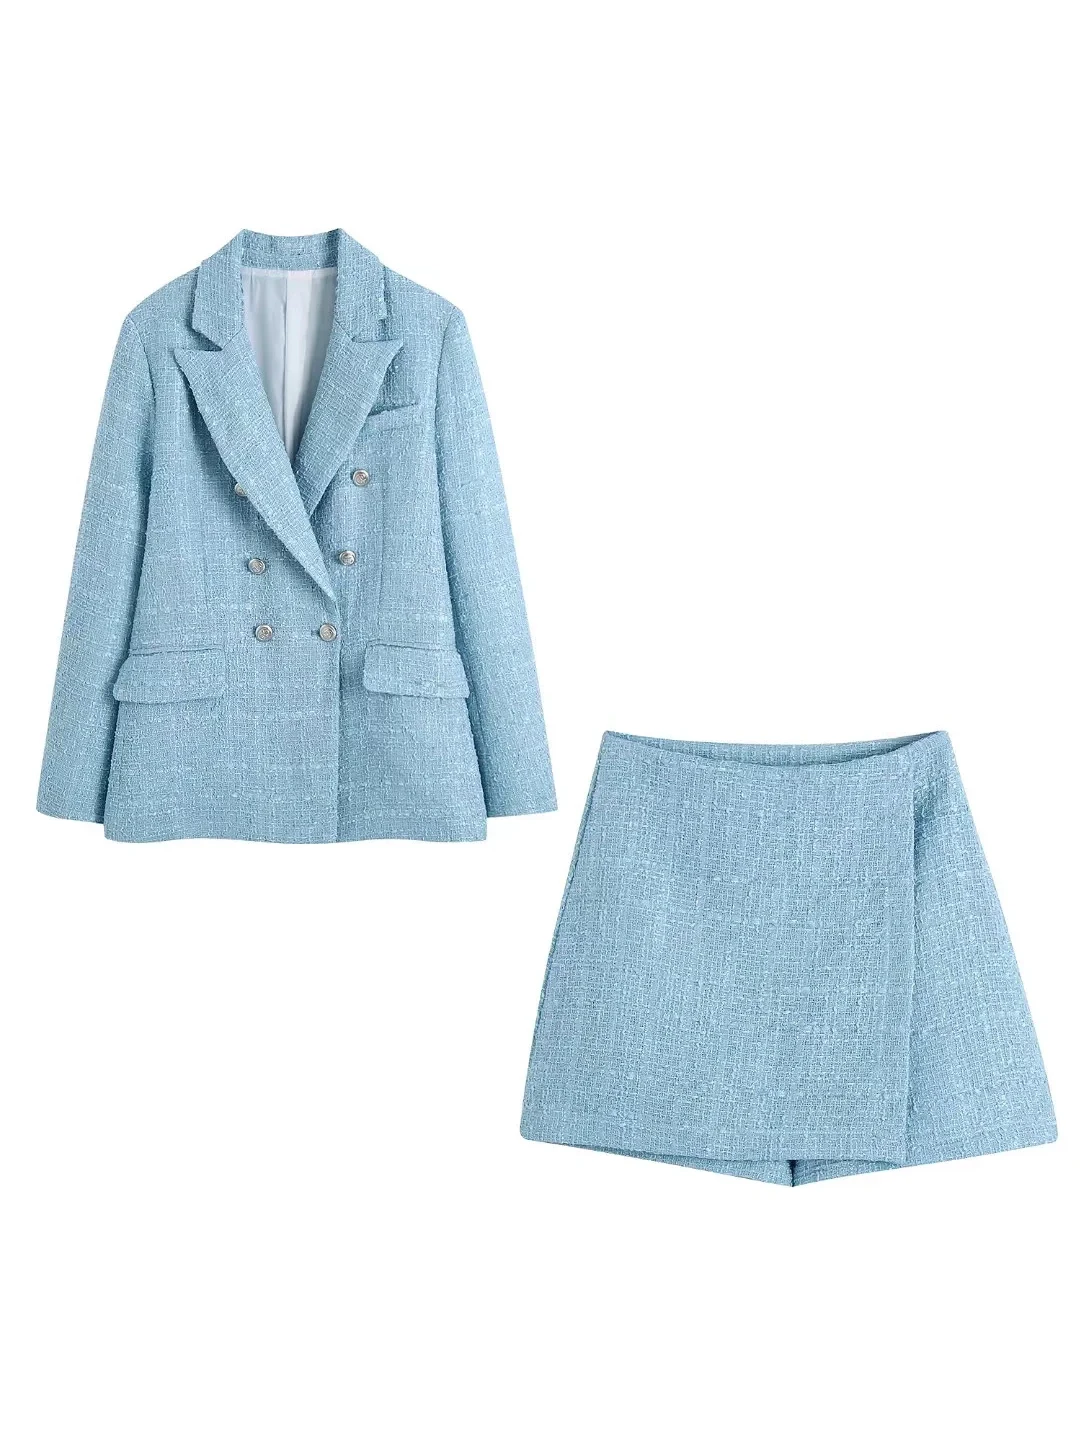 Elegant Women Blue Tweed Blazer Coat 2022 New Spring Jacket Set High Waist Mini Skirt Shorts For Office Lady Outfits Outerwear